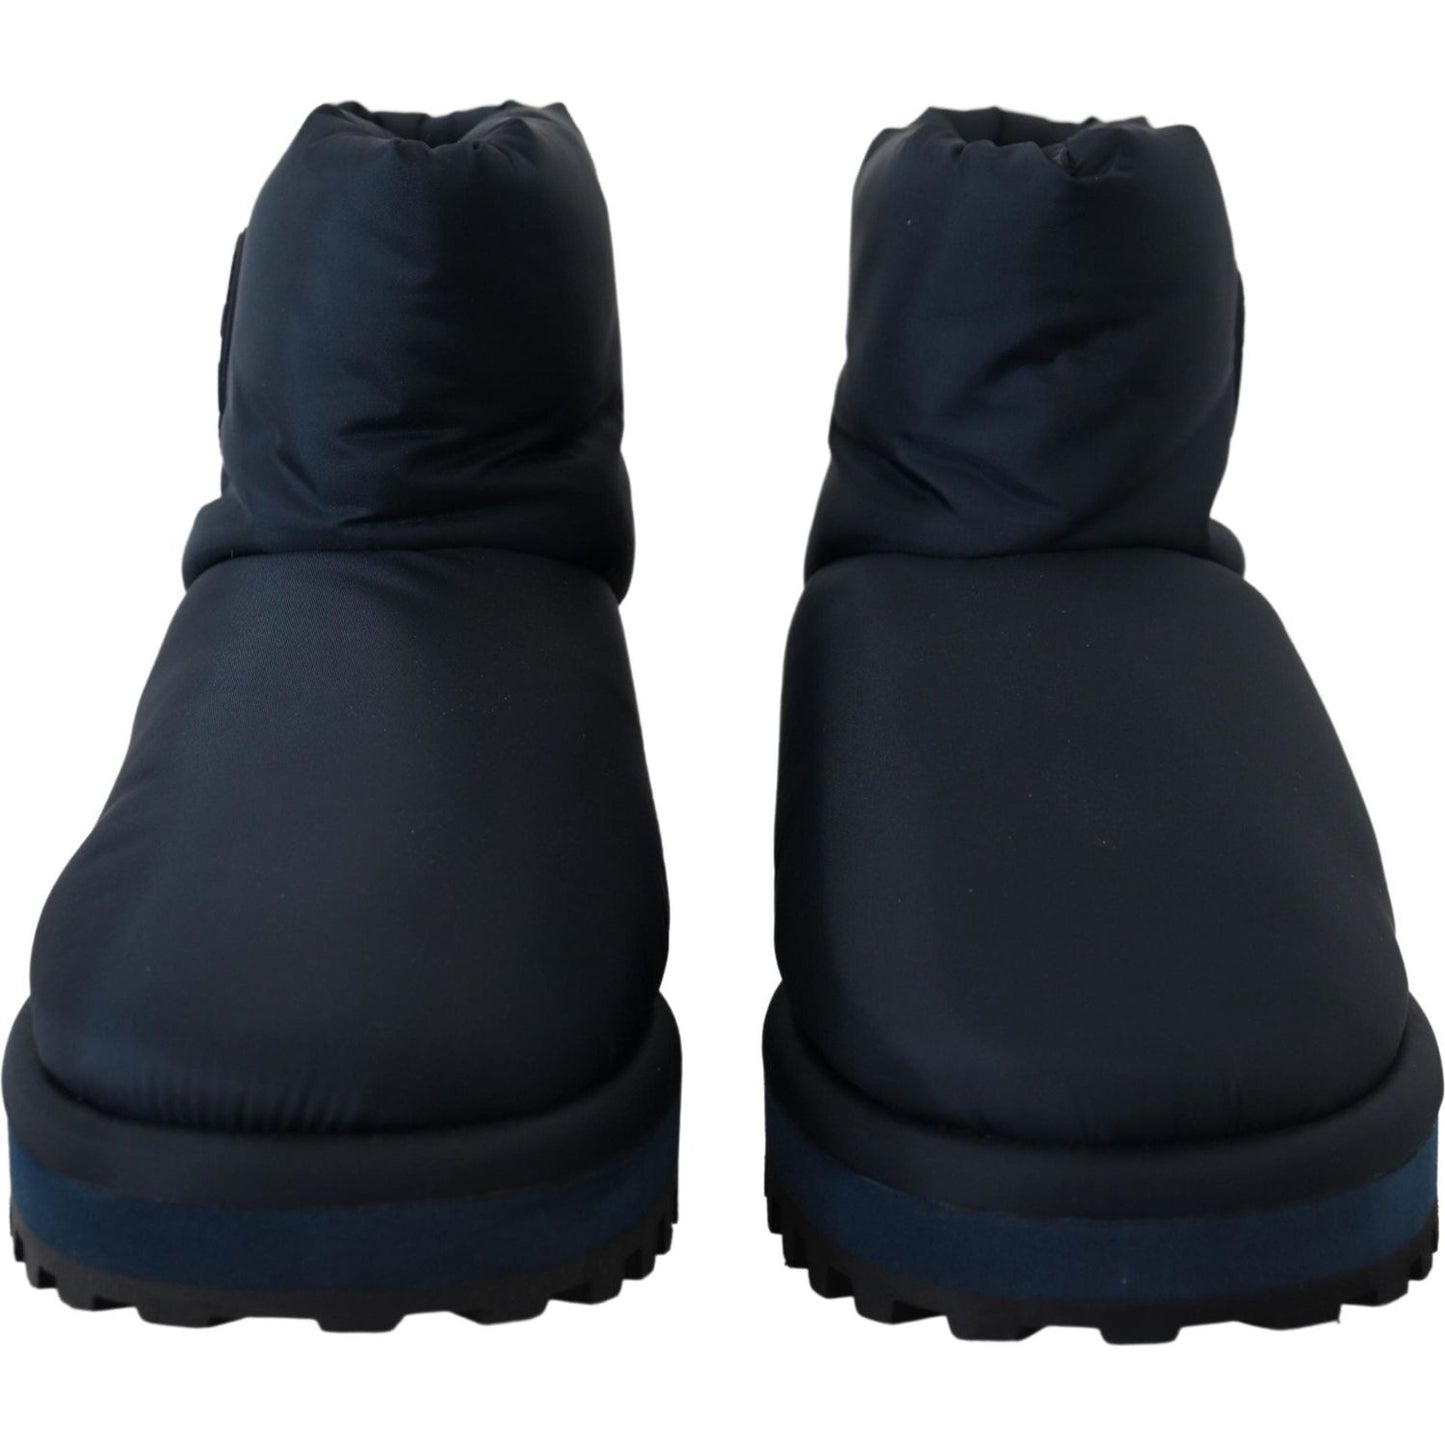 Dolce & GabbanaElegant Ankle Height Blue Boots for Sophisticated StyleMcRichard Designer Brands£419.00